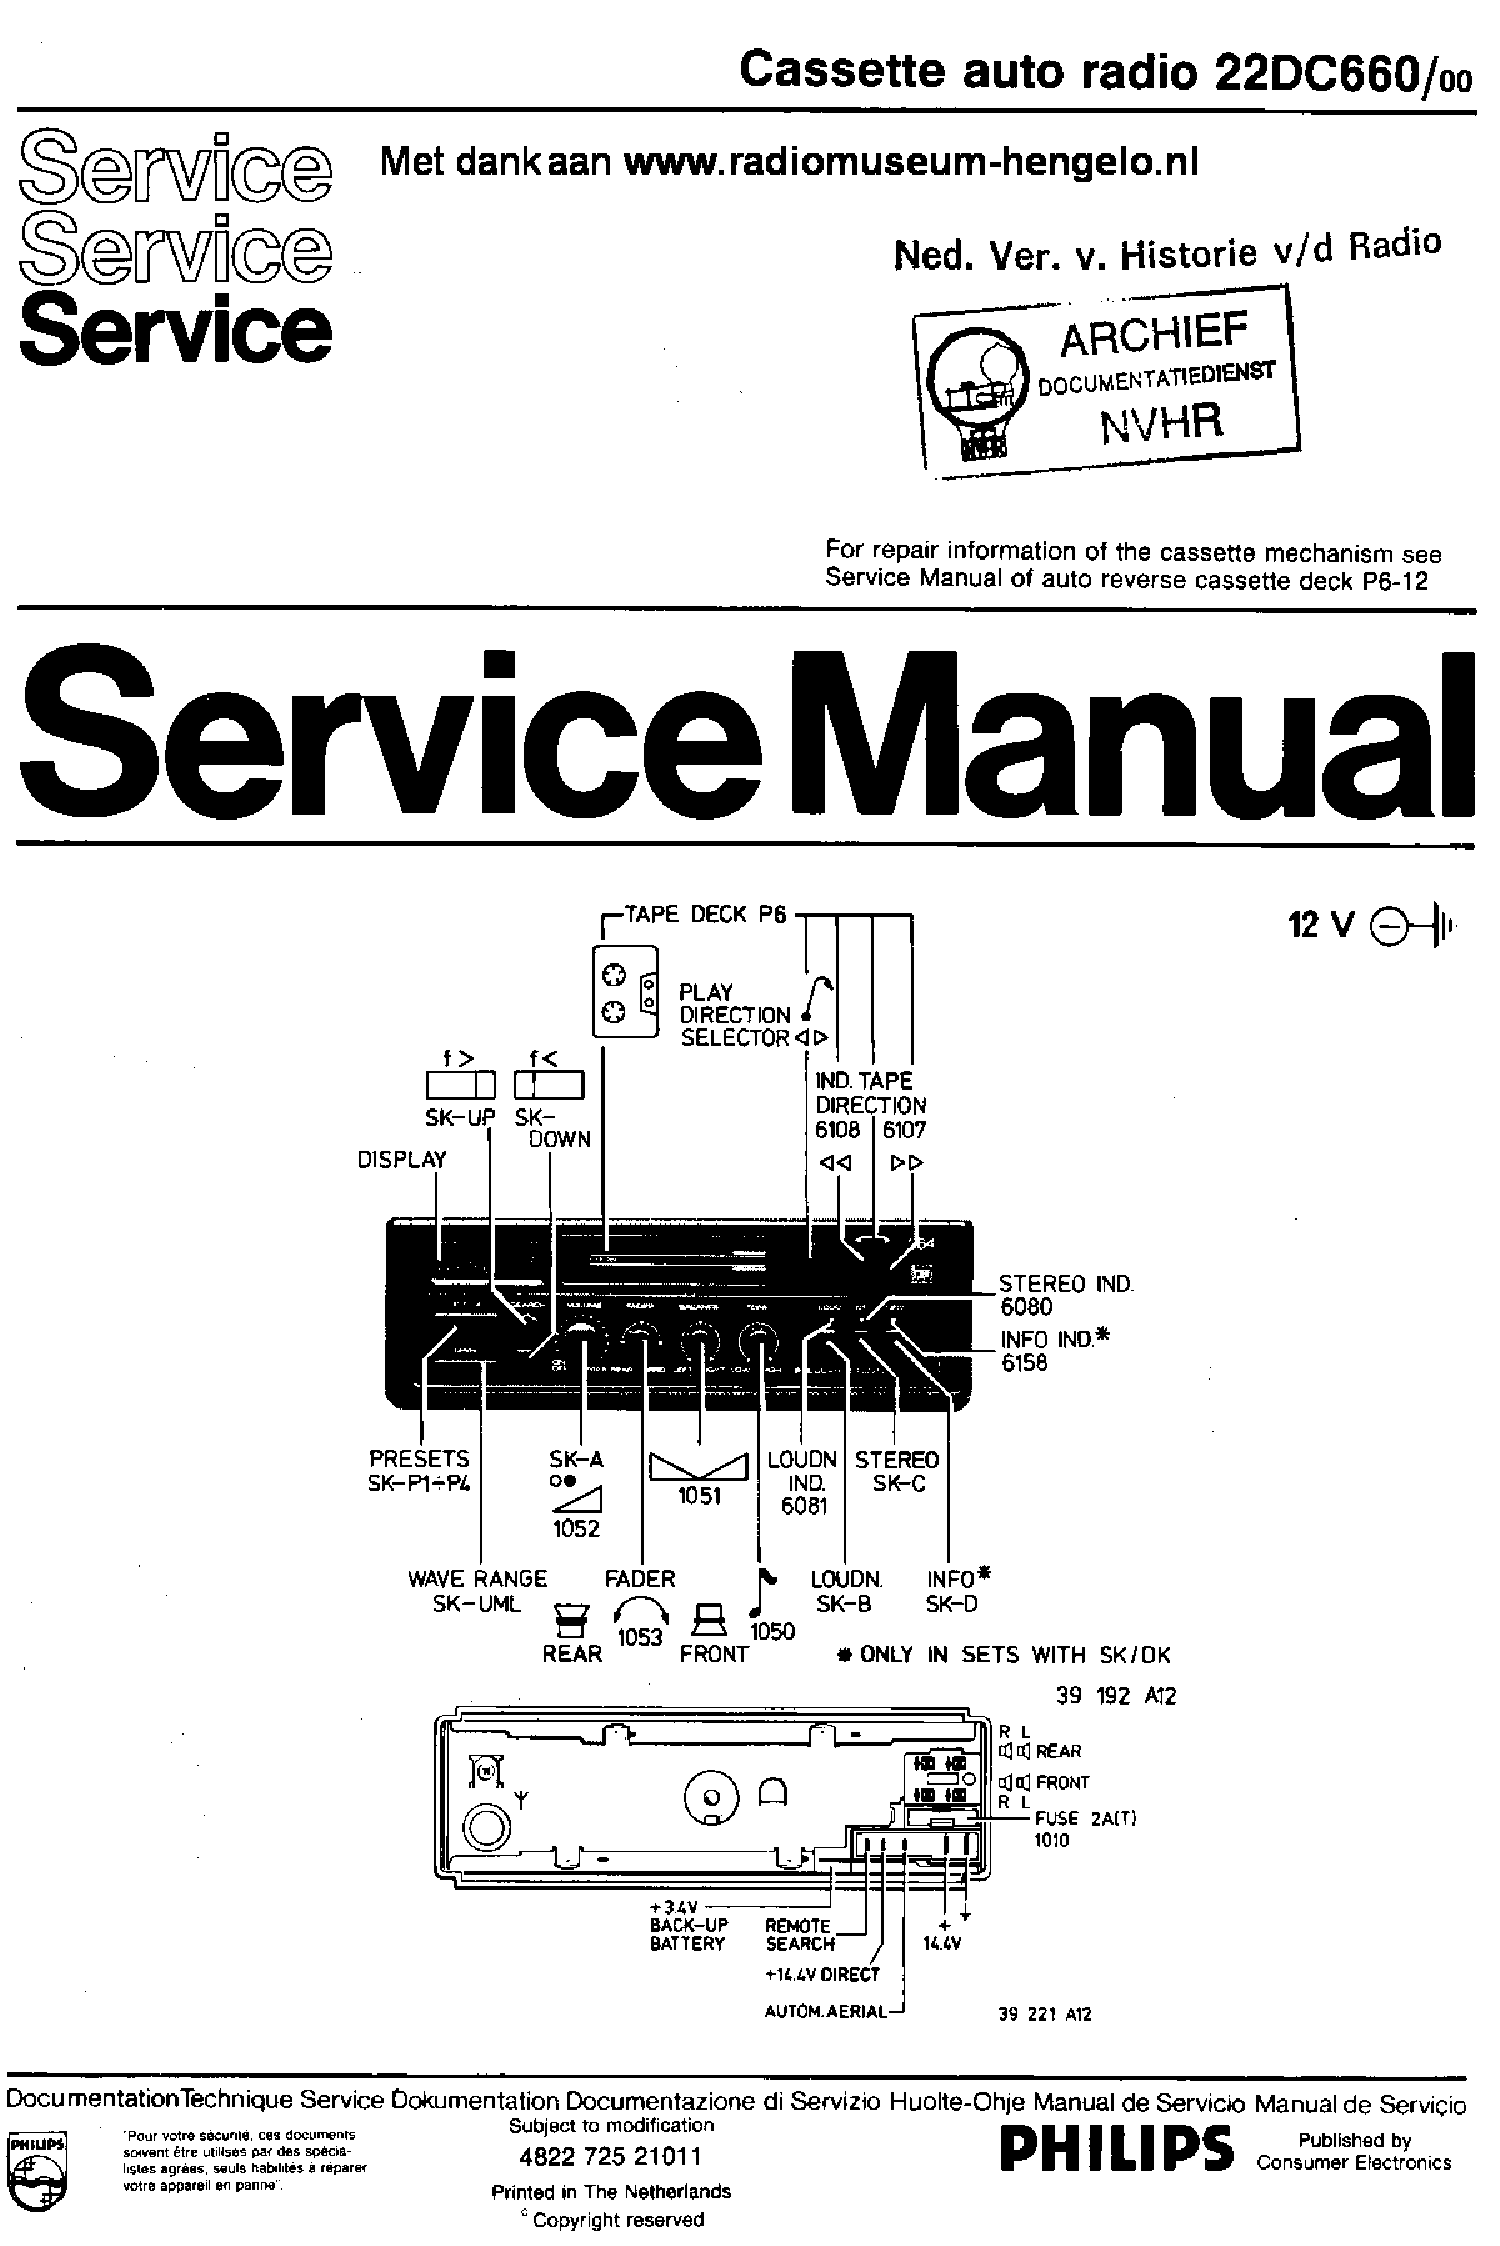 PHILIPS 22DC660-00 CASSETTE AUTO RADIO SM service manual (1st page)